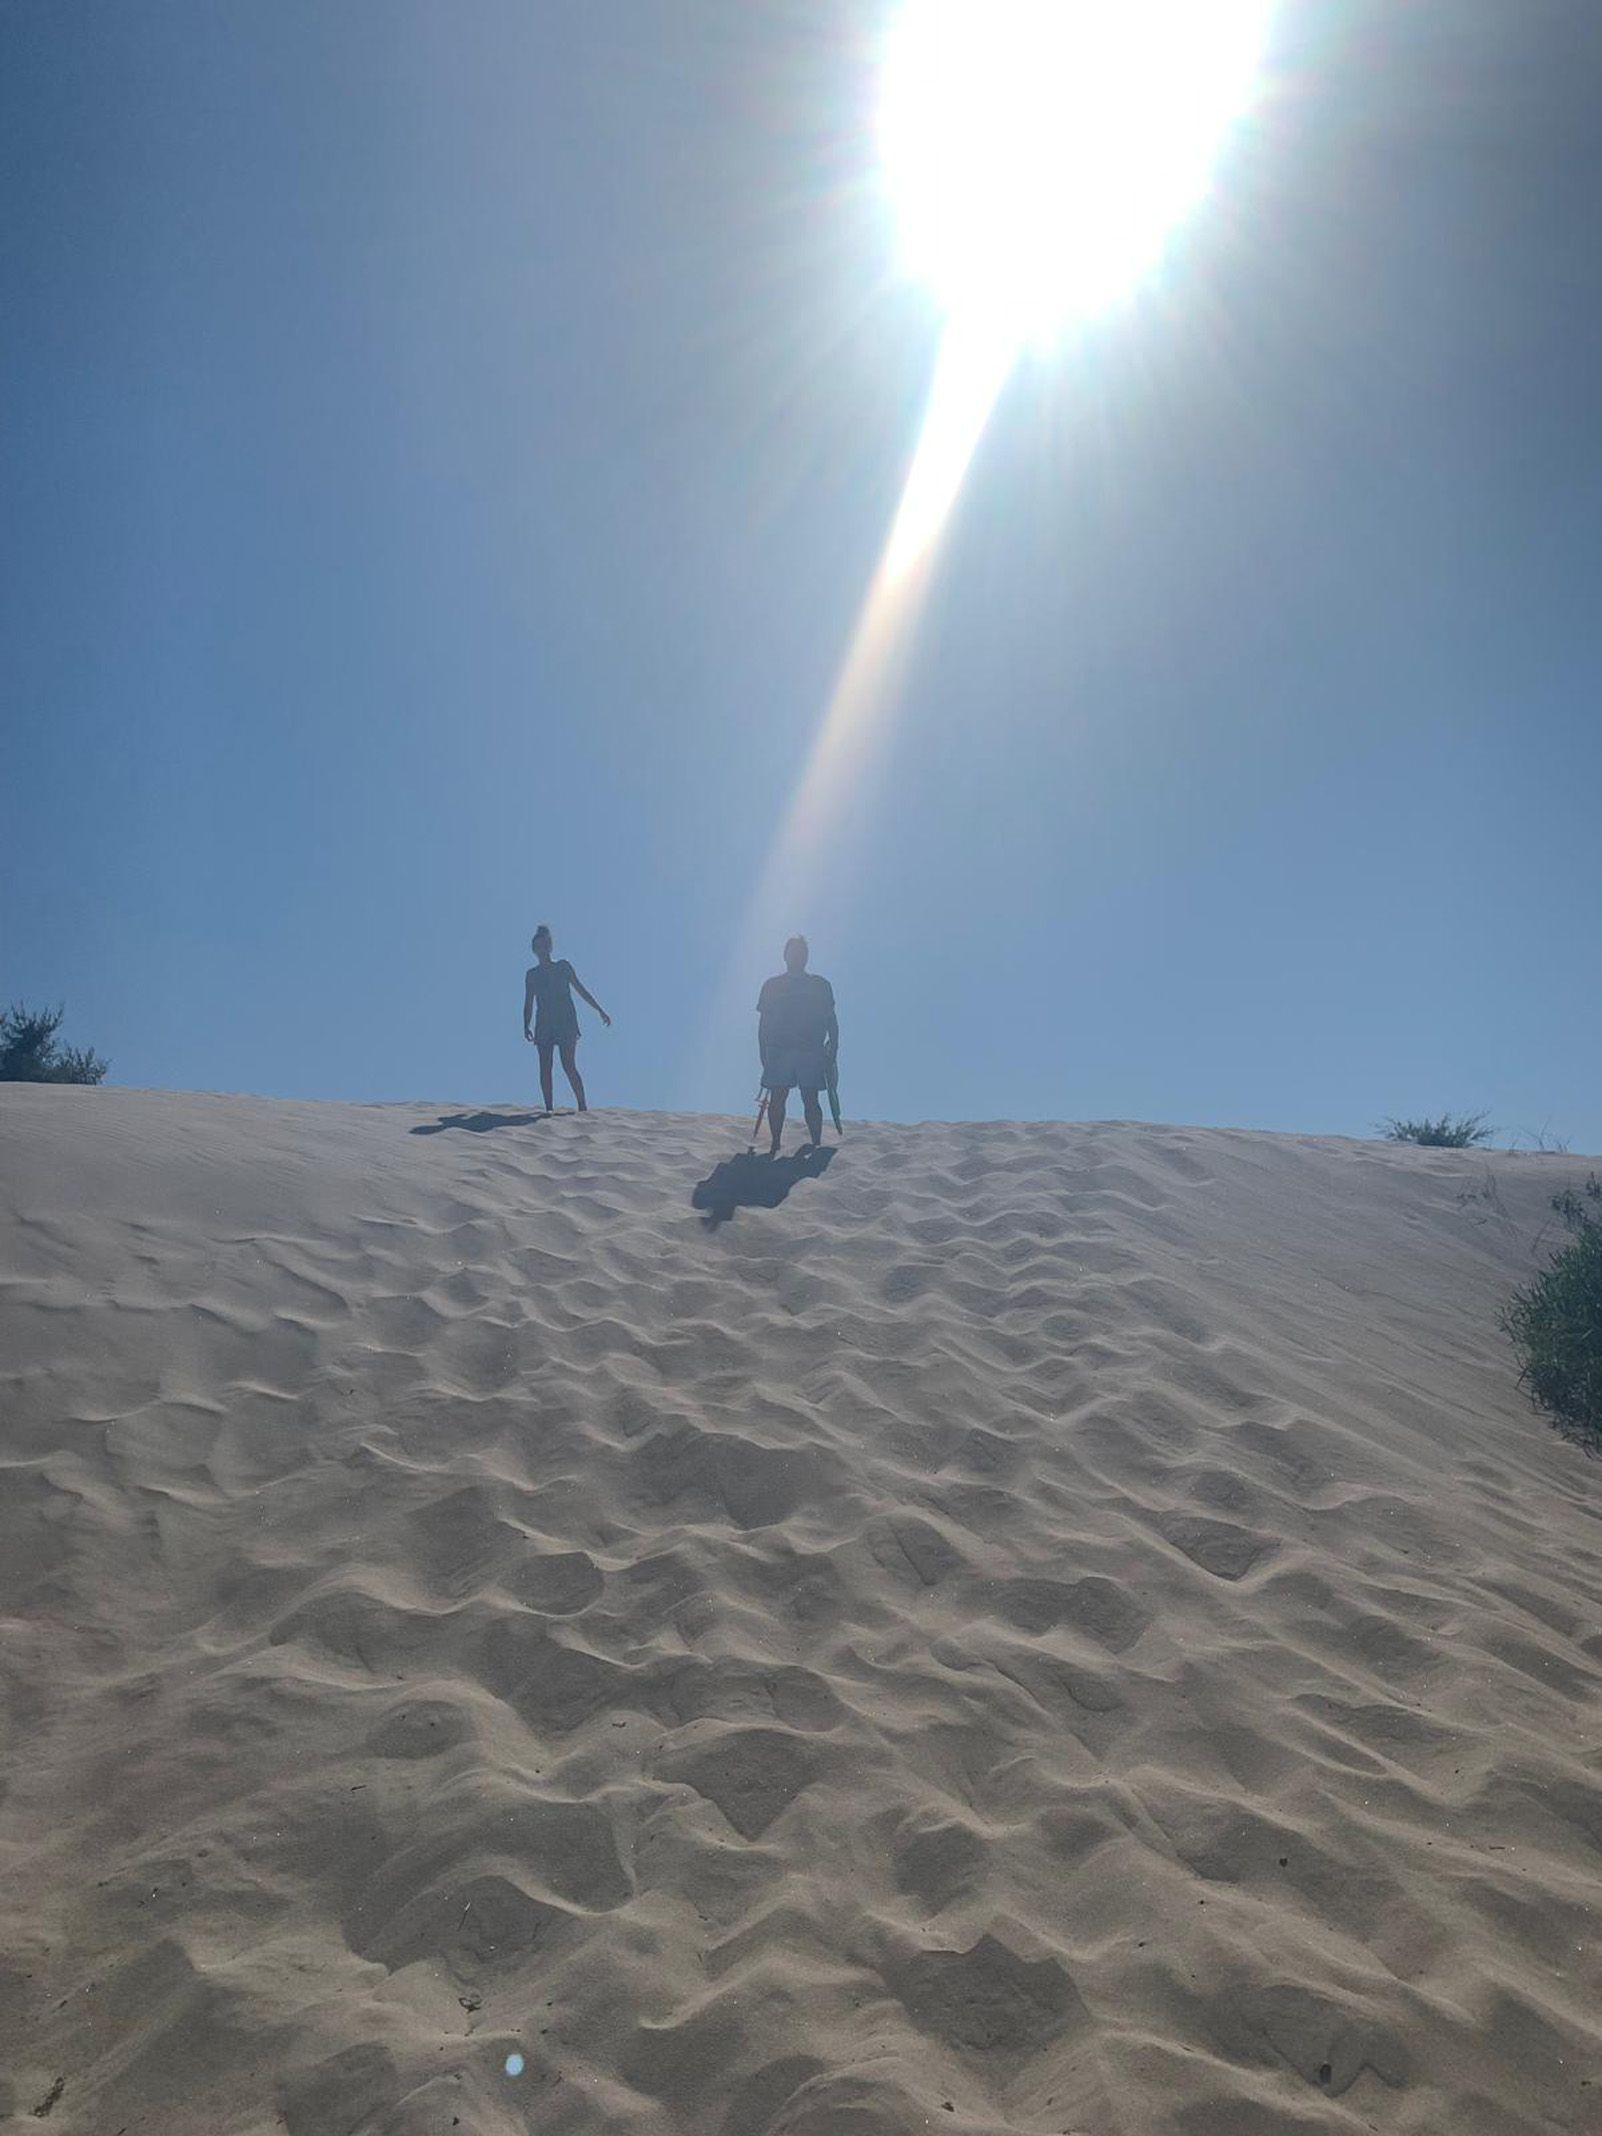 Carme Nicolas Ortiz   Les dunes   Sardenya